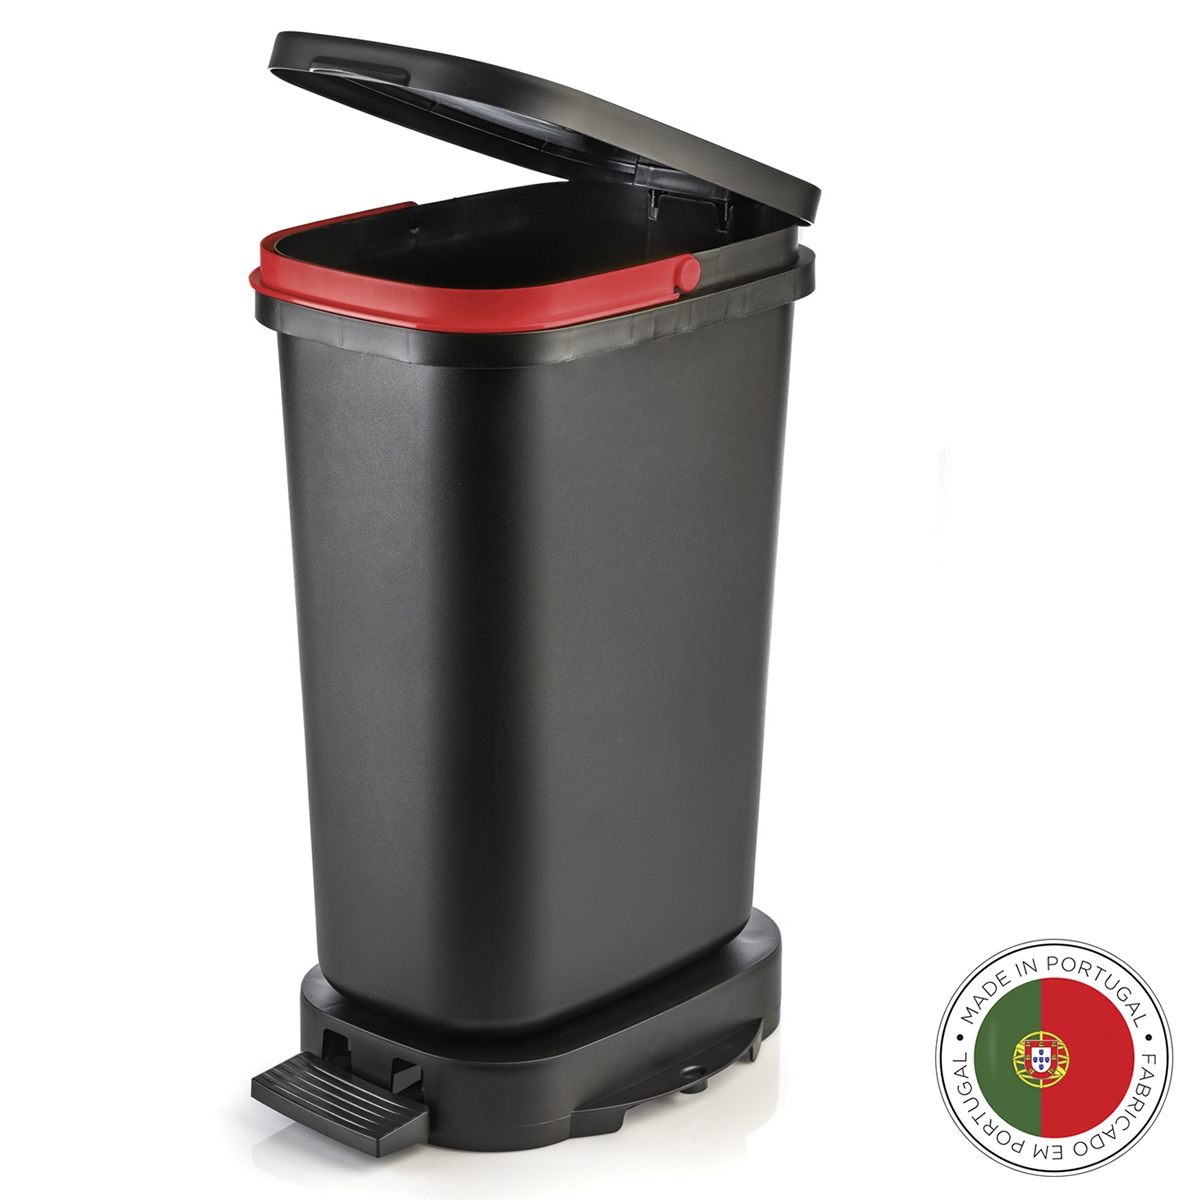 Мусорный бак с педалью BE-ECO black red, 26х36 см, 50 см, 20 л, Пластик, Faplana, Португалия